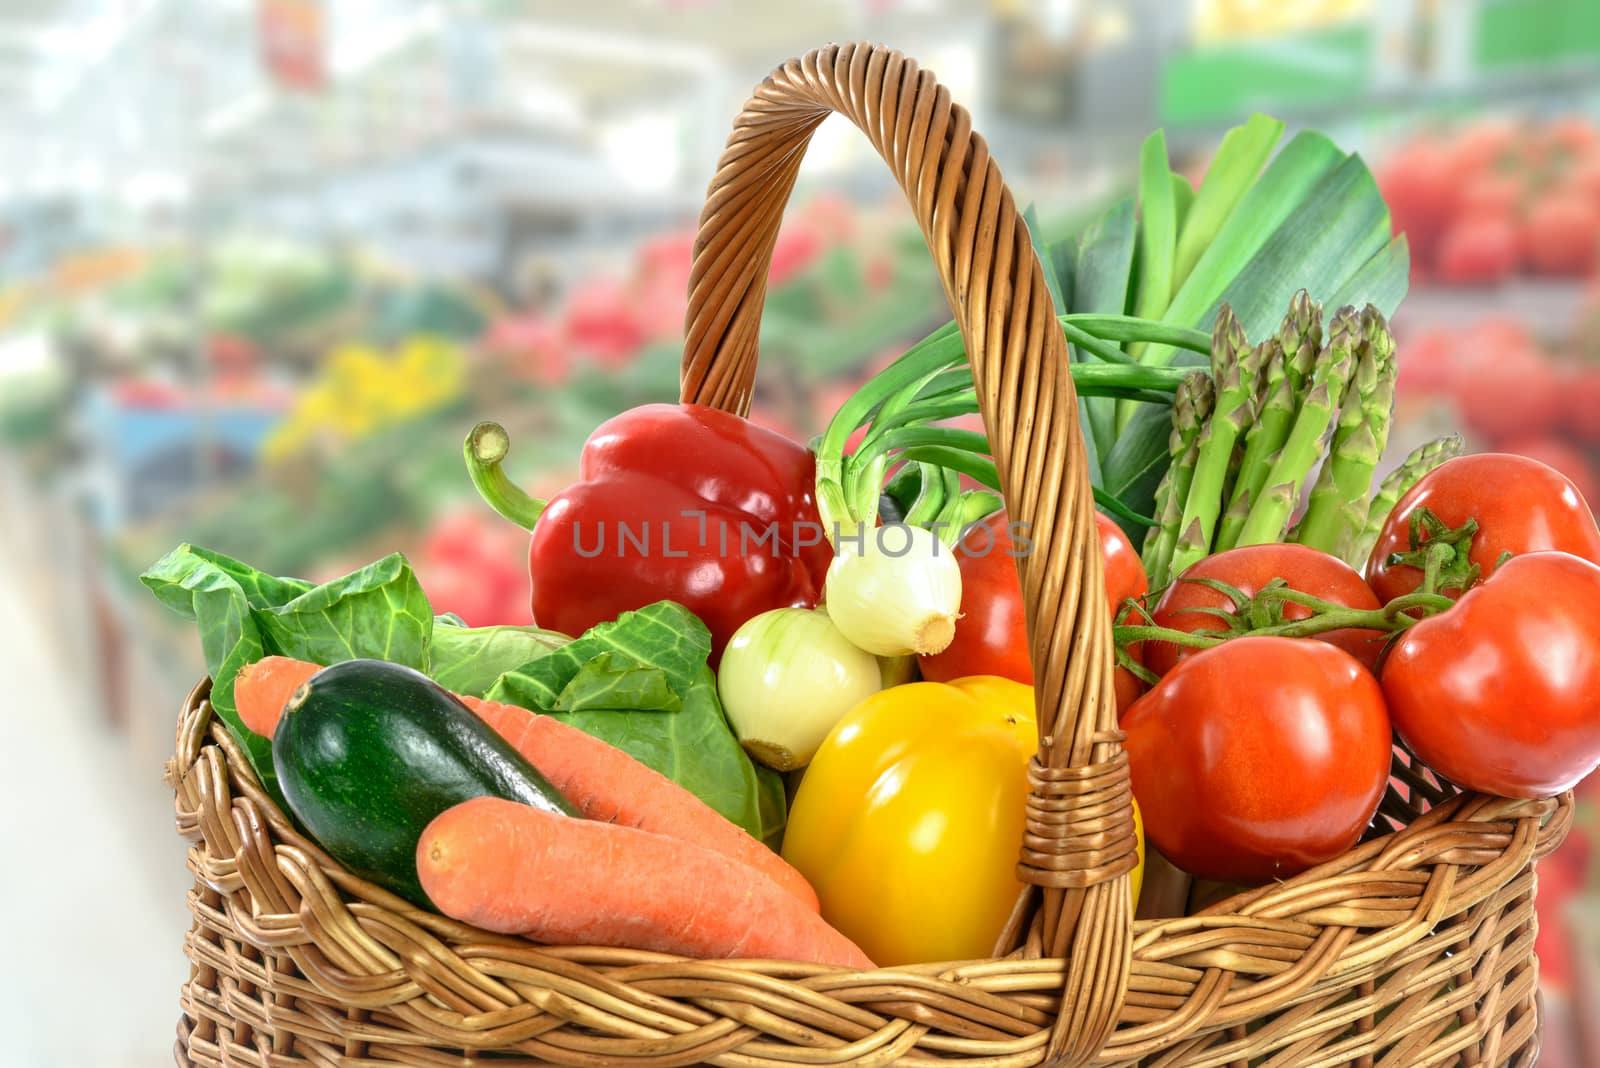 Green Grocery shopping concept image - basket full of varied fresh vegetables on a blurred supermarket background.